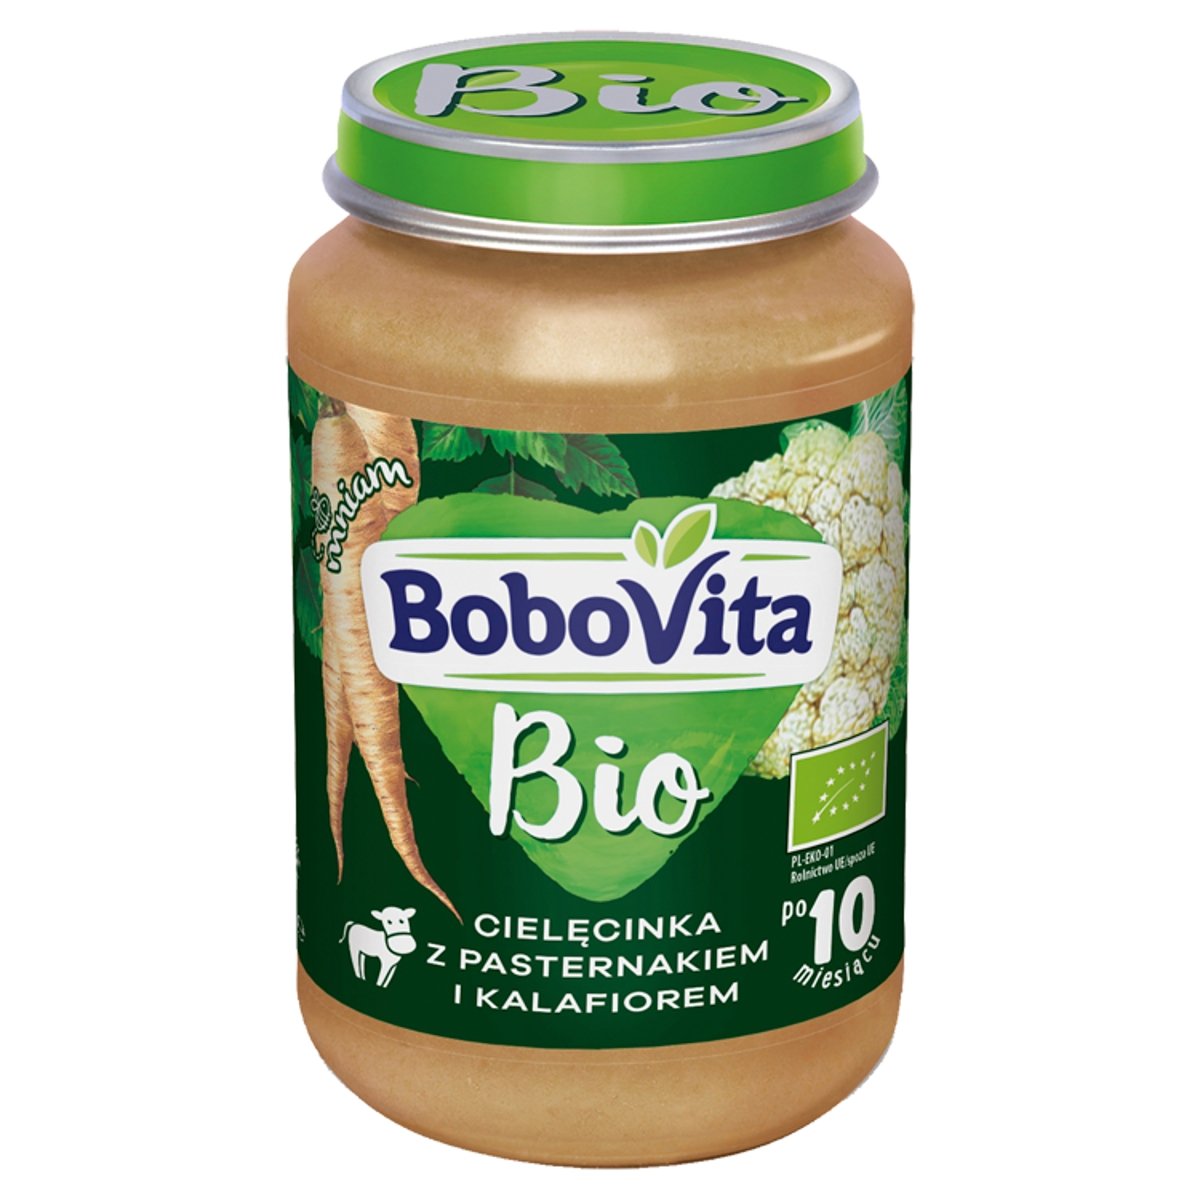 BoboVita - BIO Cielęcina z pasternakiem i kalafiorem po 10 miesiącu